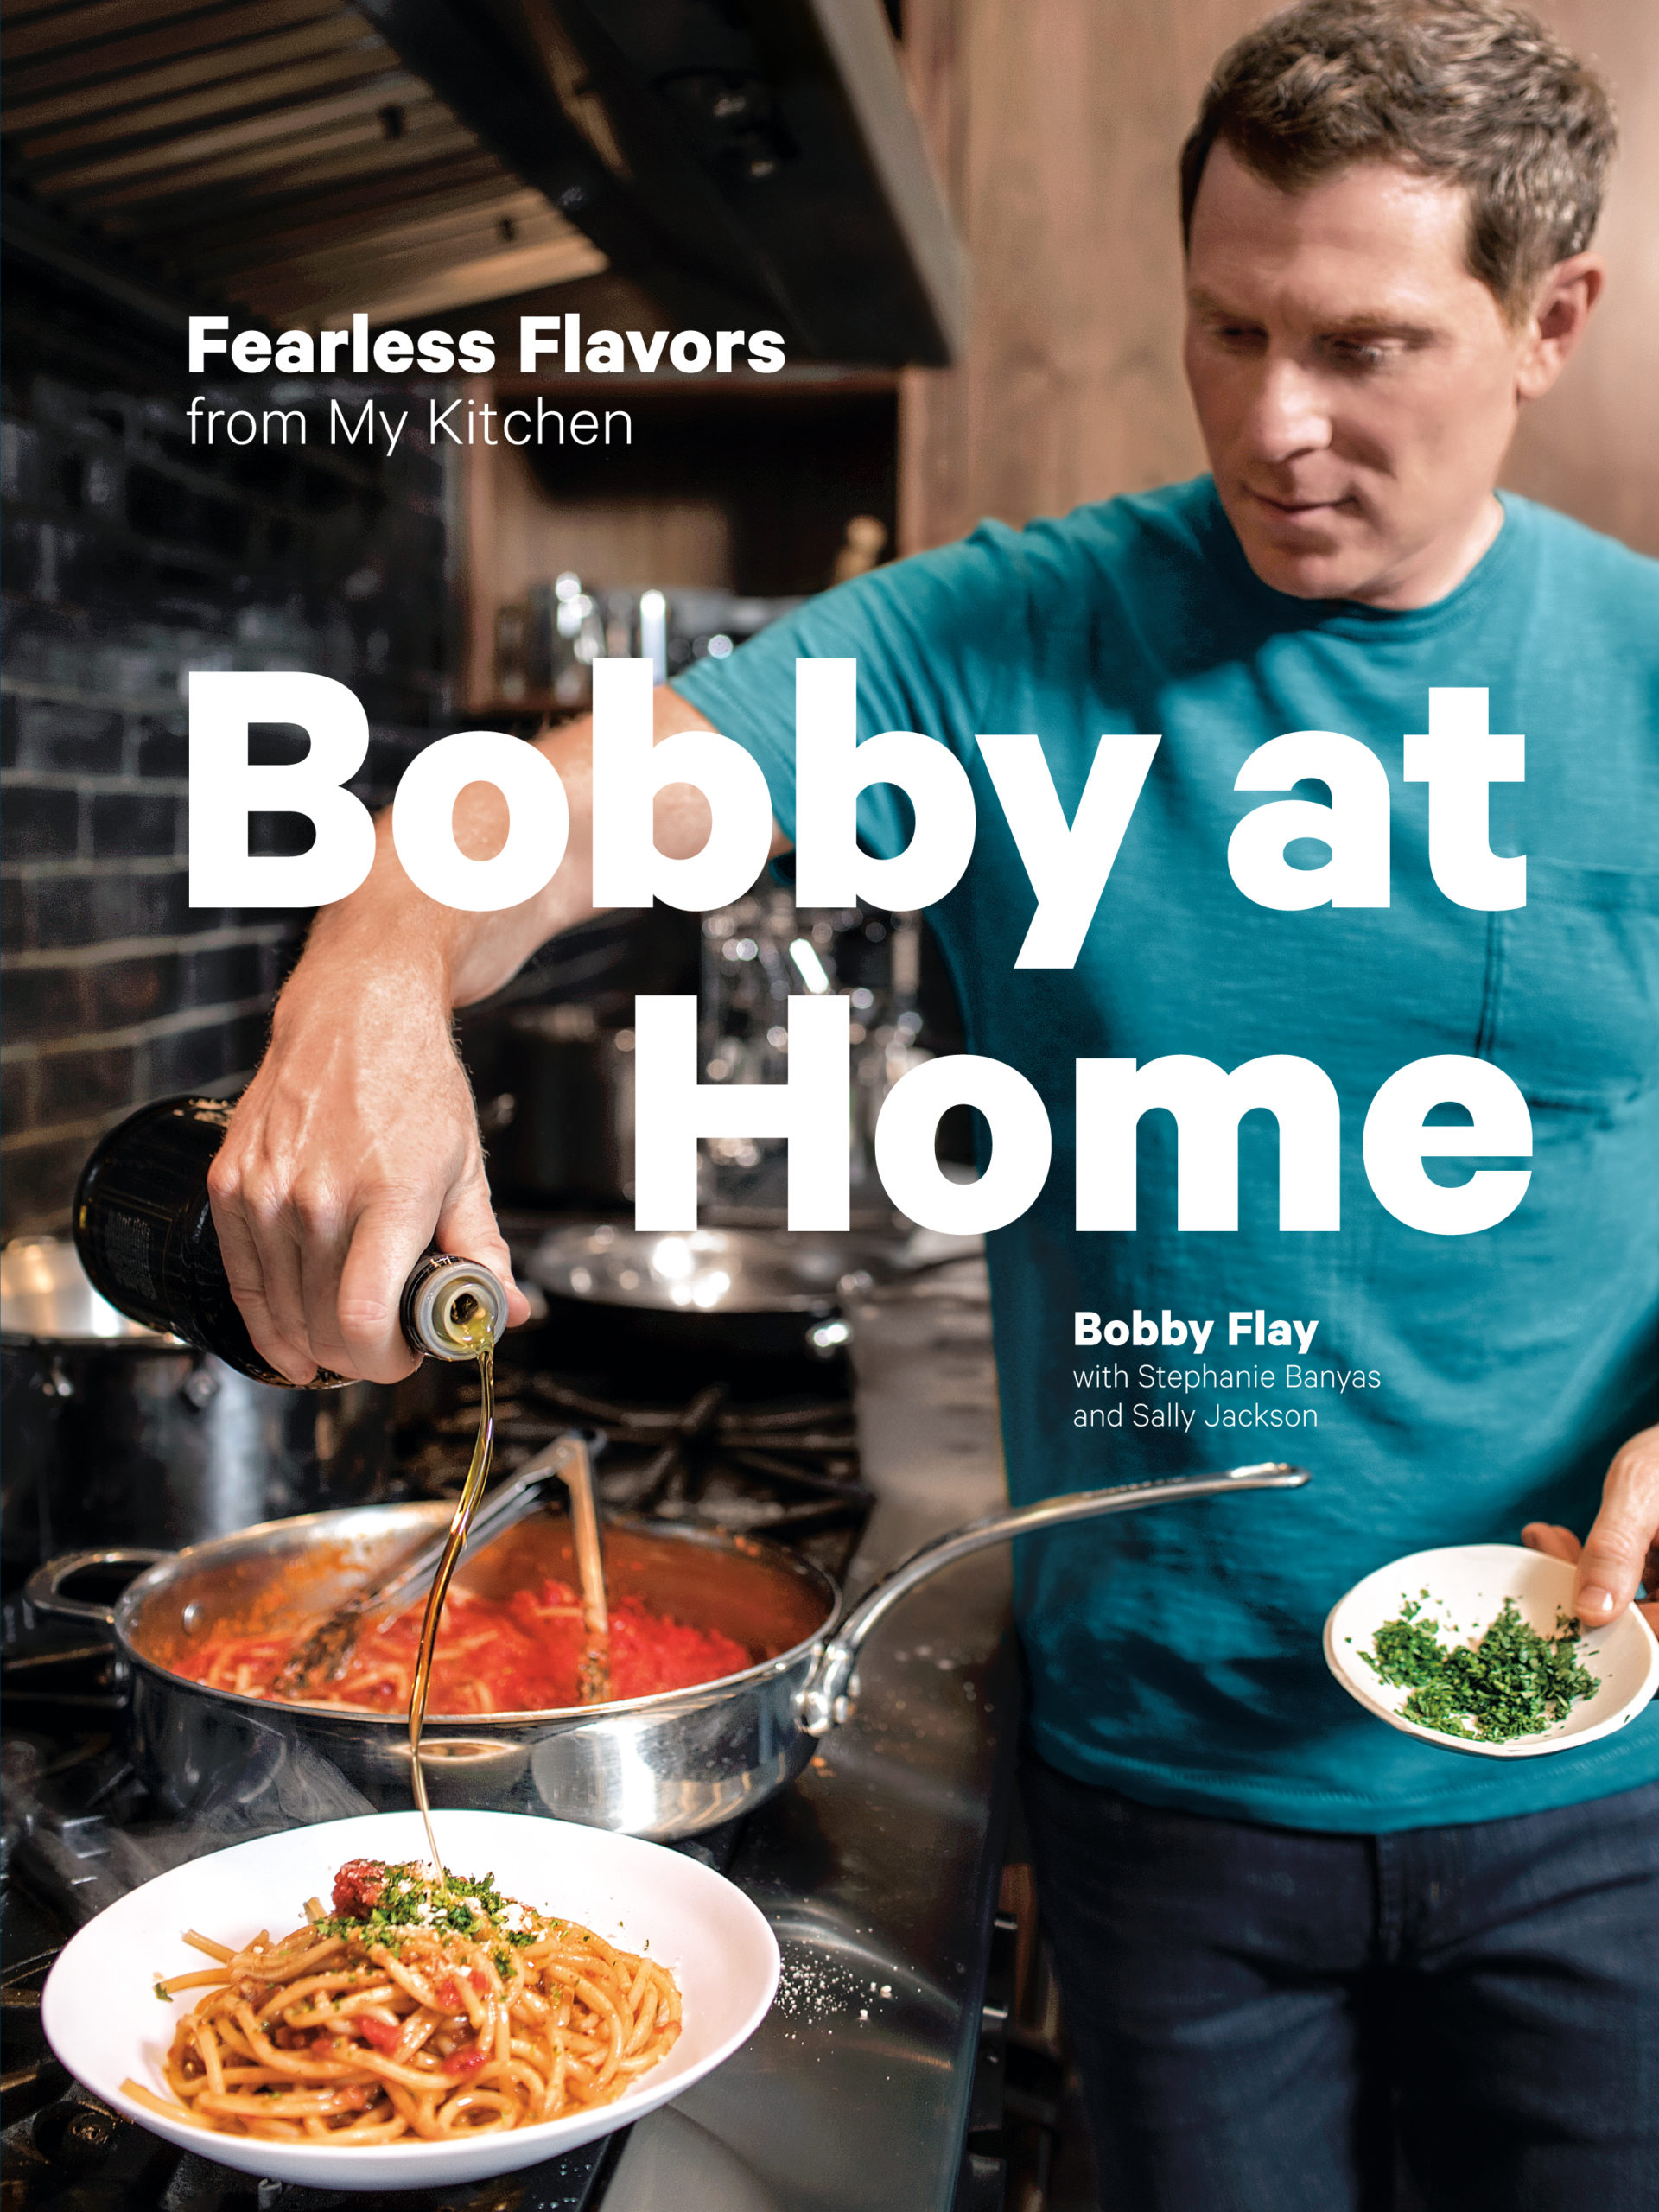 https://api.bobbyflay.com/wp-content/uploads/2021/03/Bobby_at_Home-Cover-1-scaled.jpg